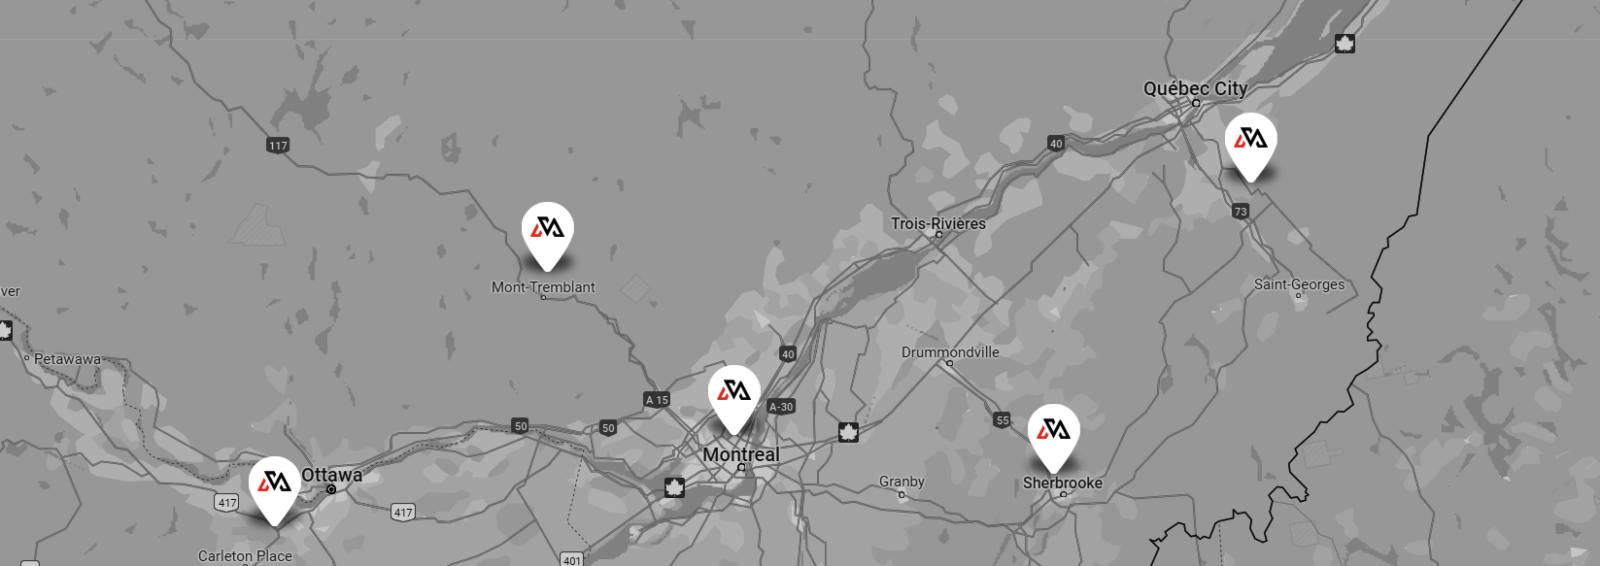 Structure d'acier Québec et Ontario